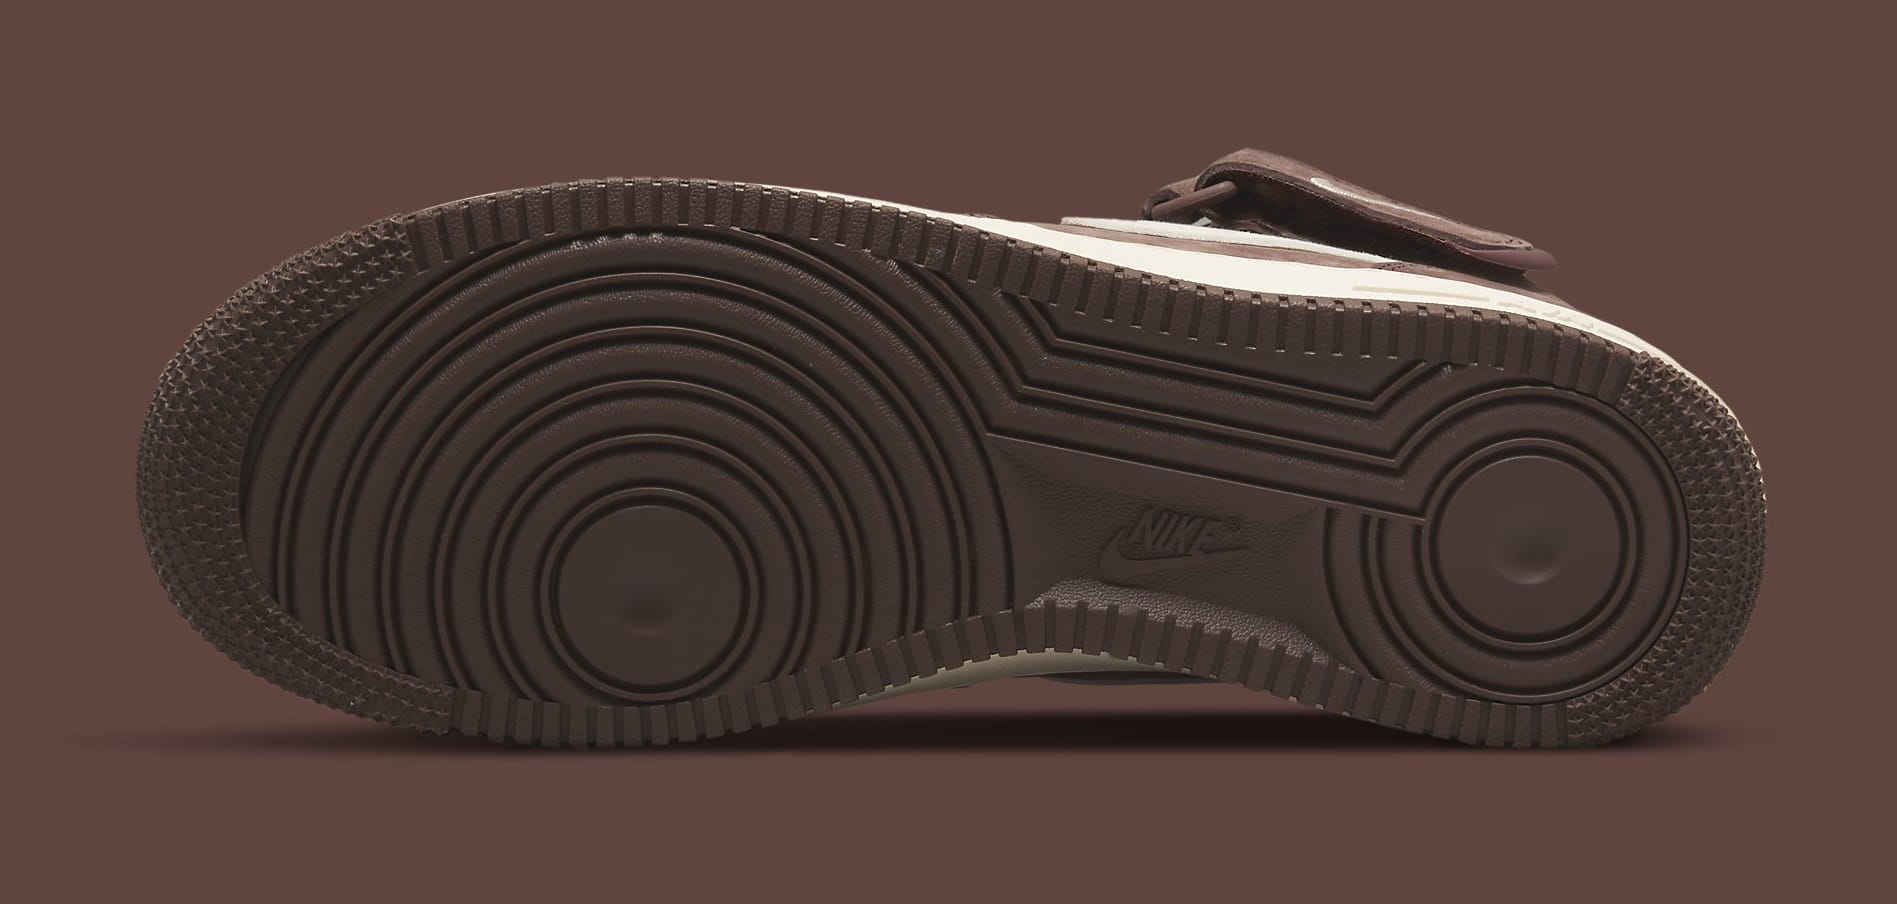 Release Date: Air Force 1 Mid 'Chocolate' 2022 Retro - Sneaker Freaker